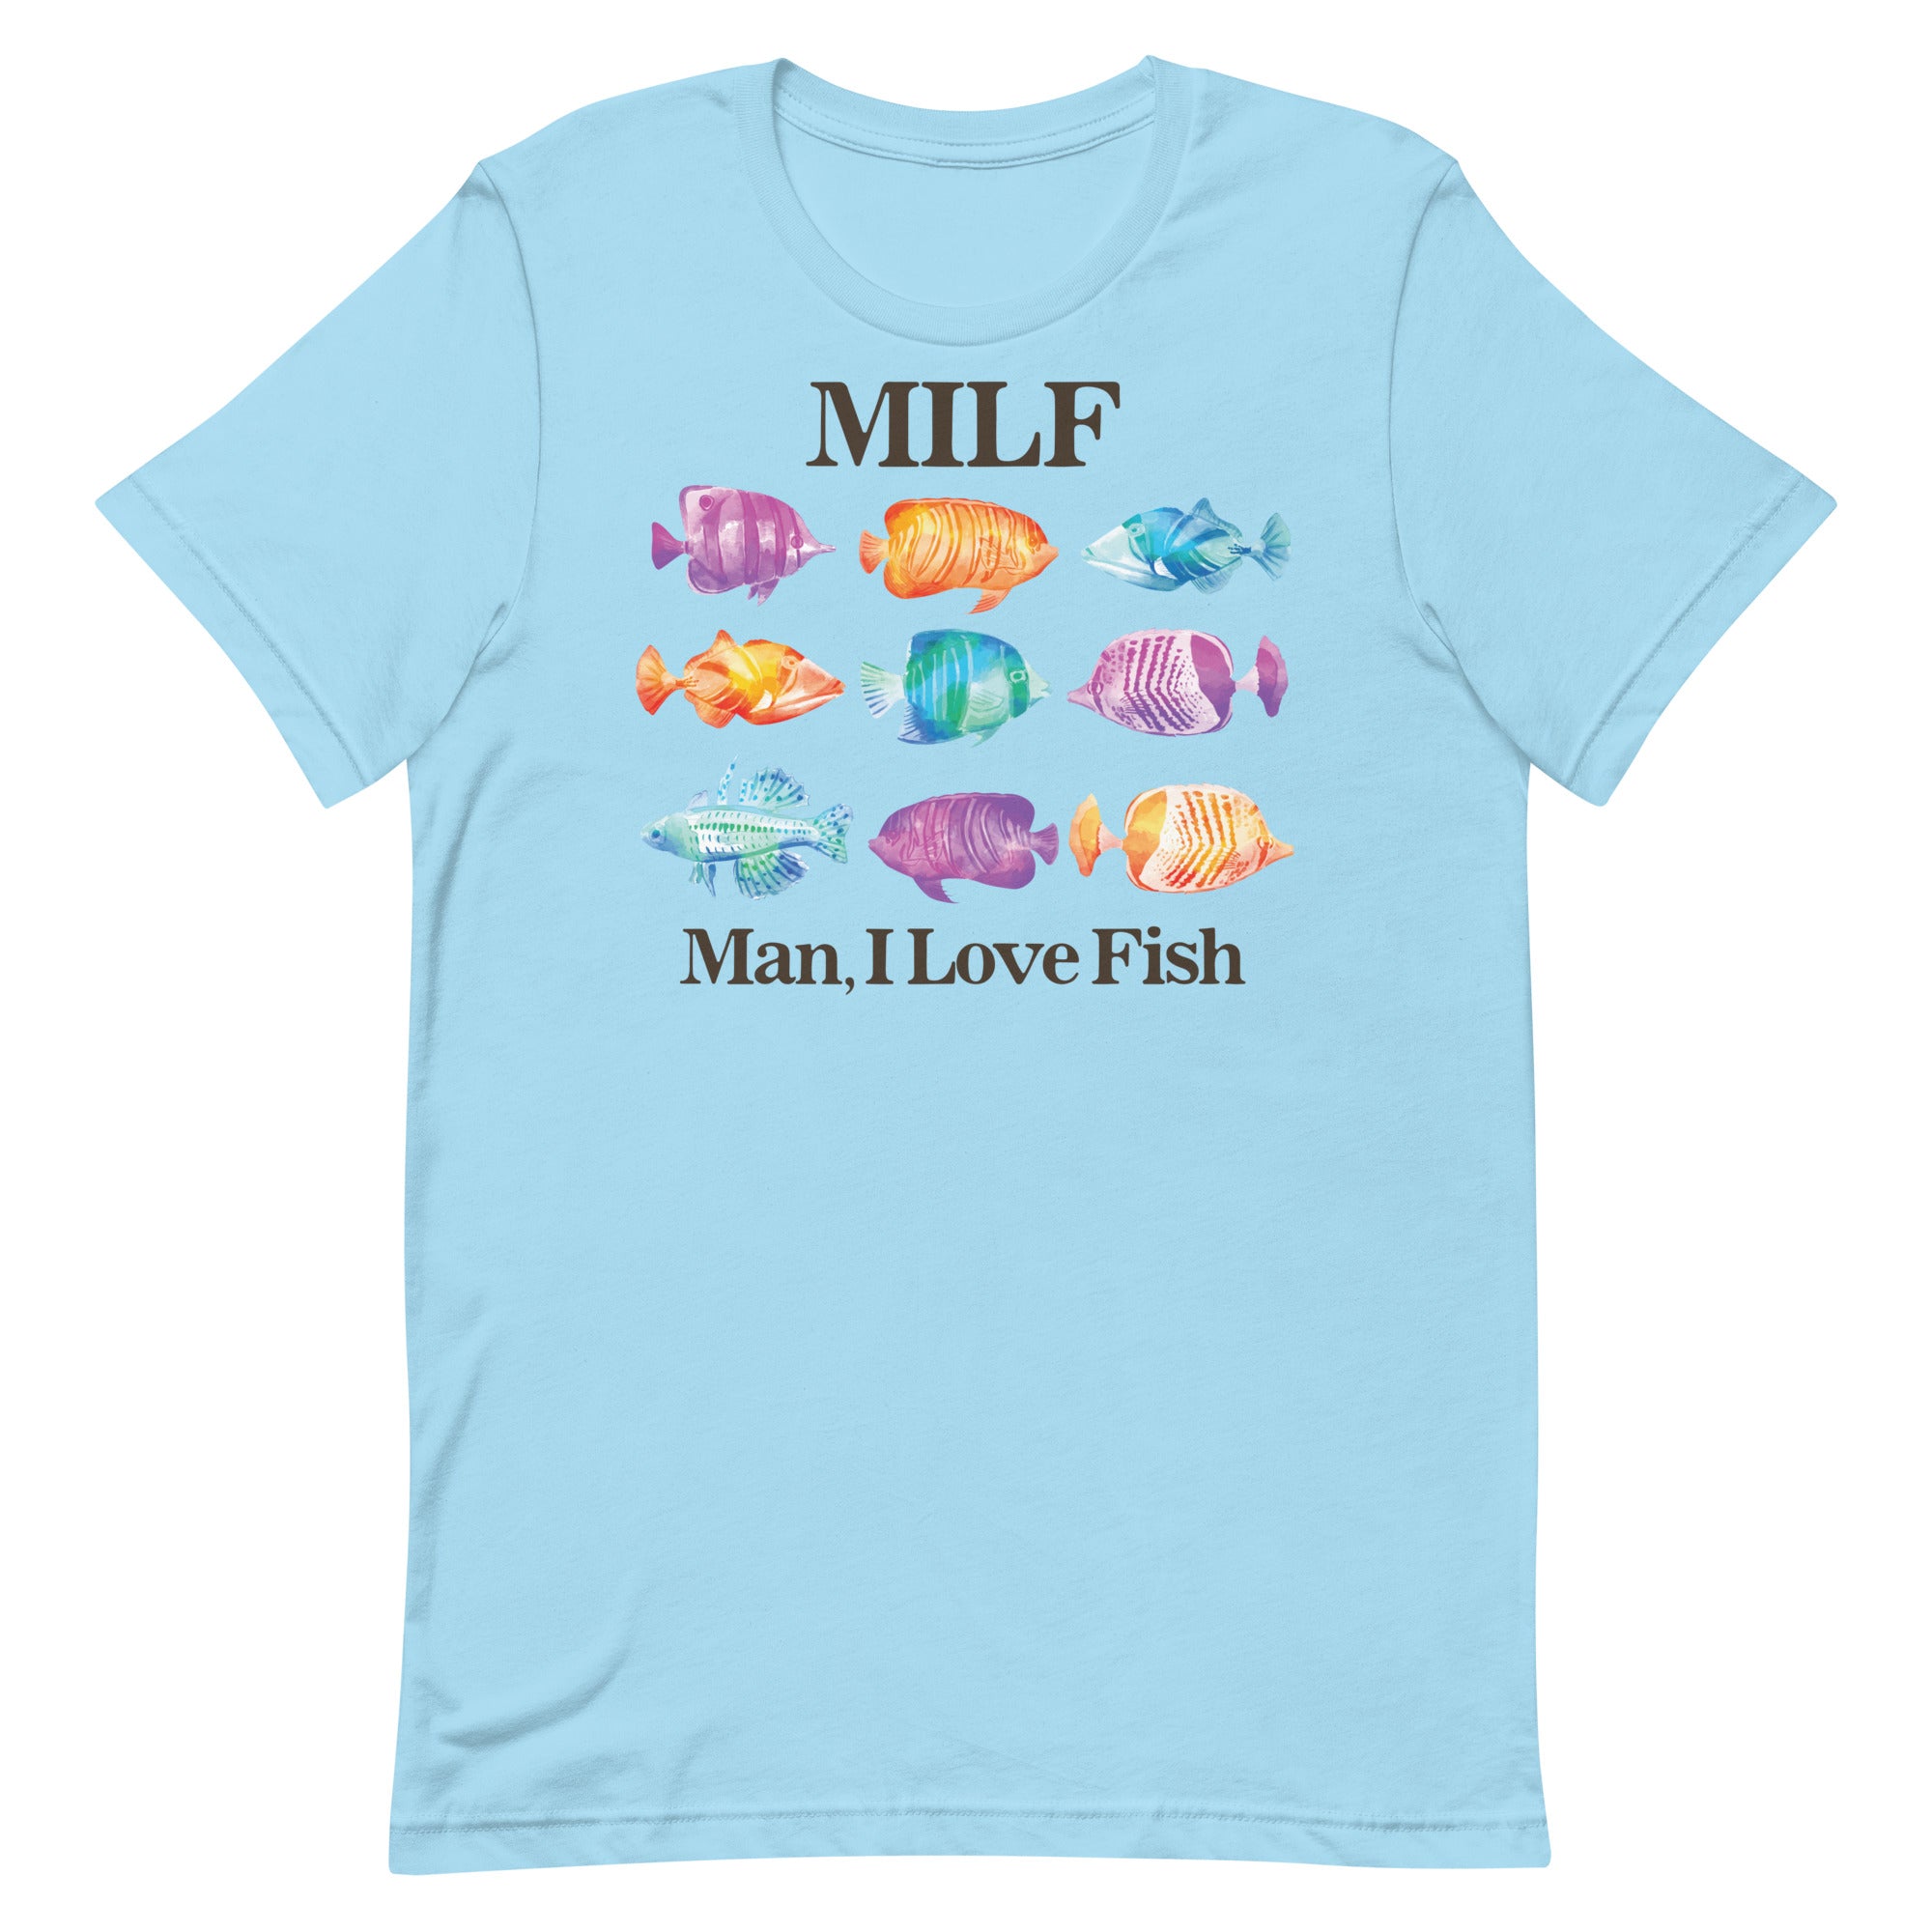 Man I Love Fishing! T-Shirt X-Large / Yellow